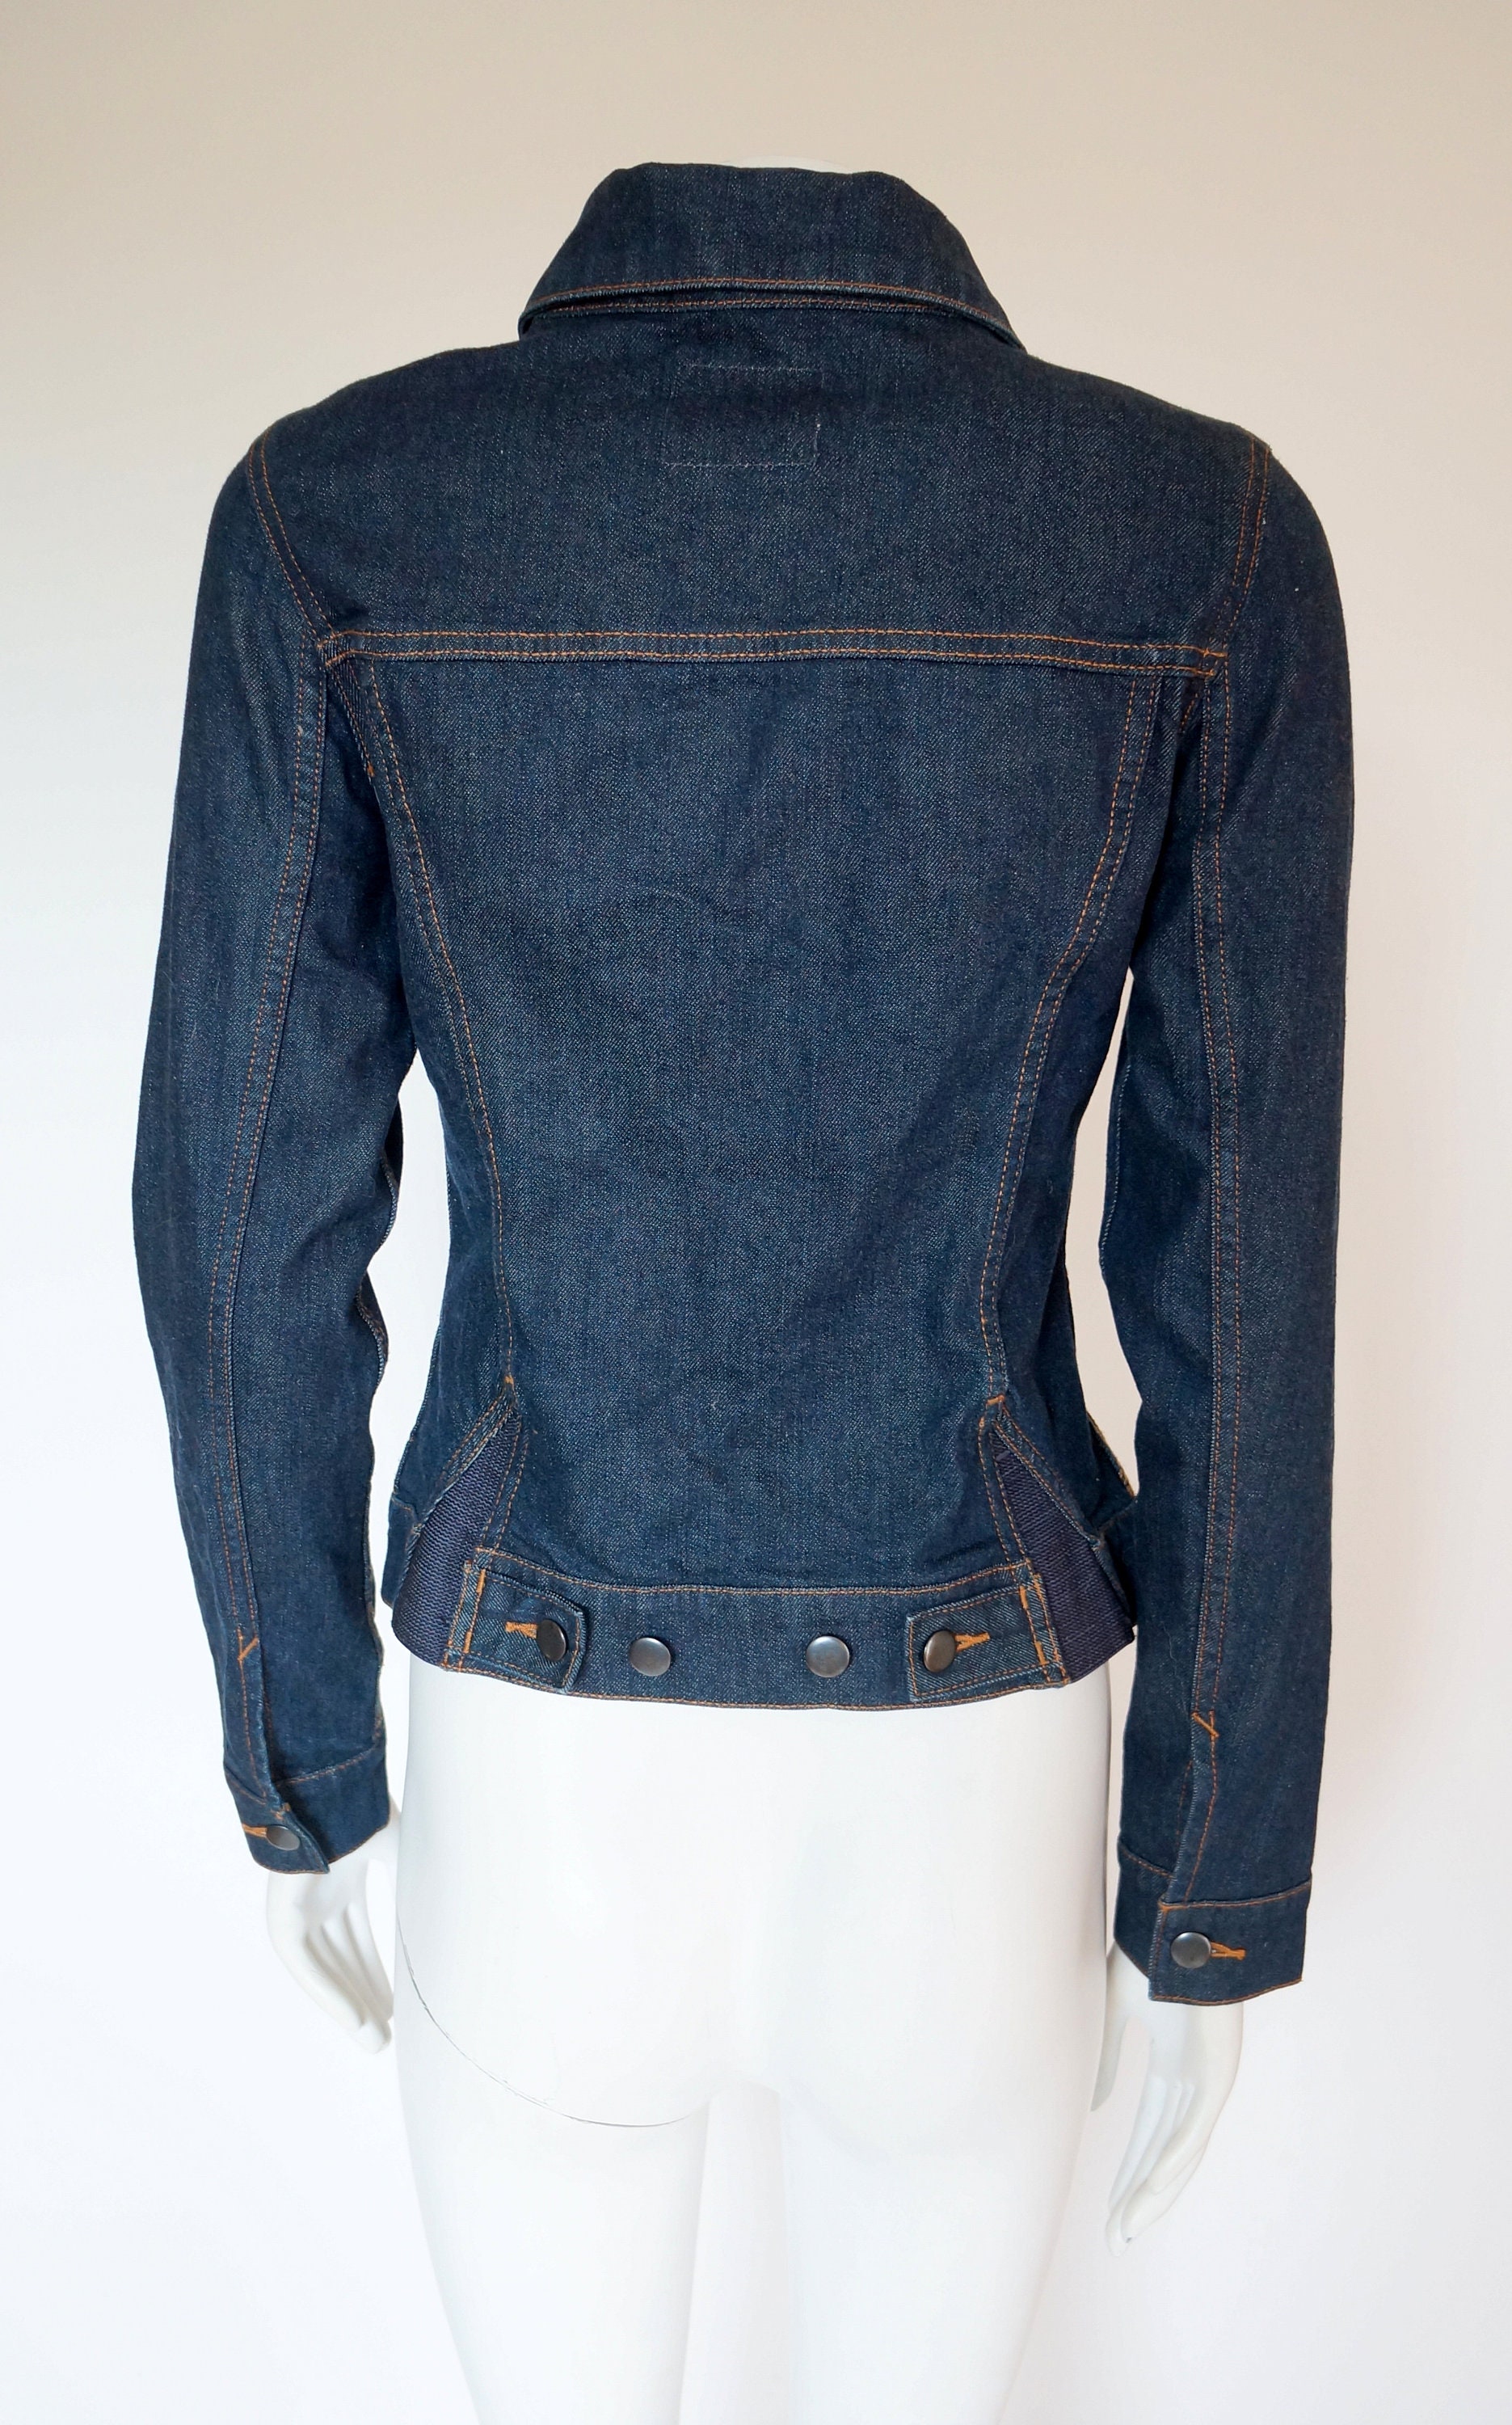 Gaultier Denim Corset Jacket Jean Paul Gaultier Vintage Bra | Etsy